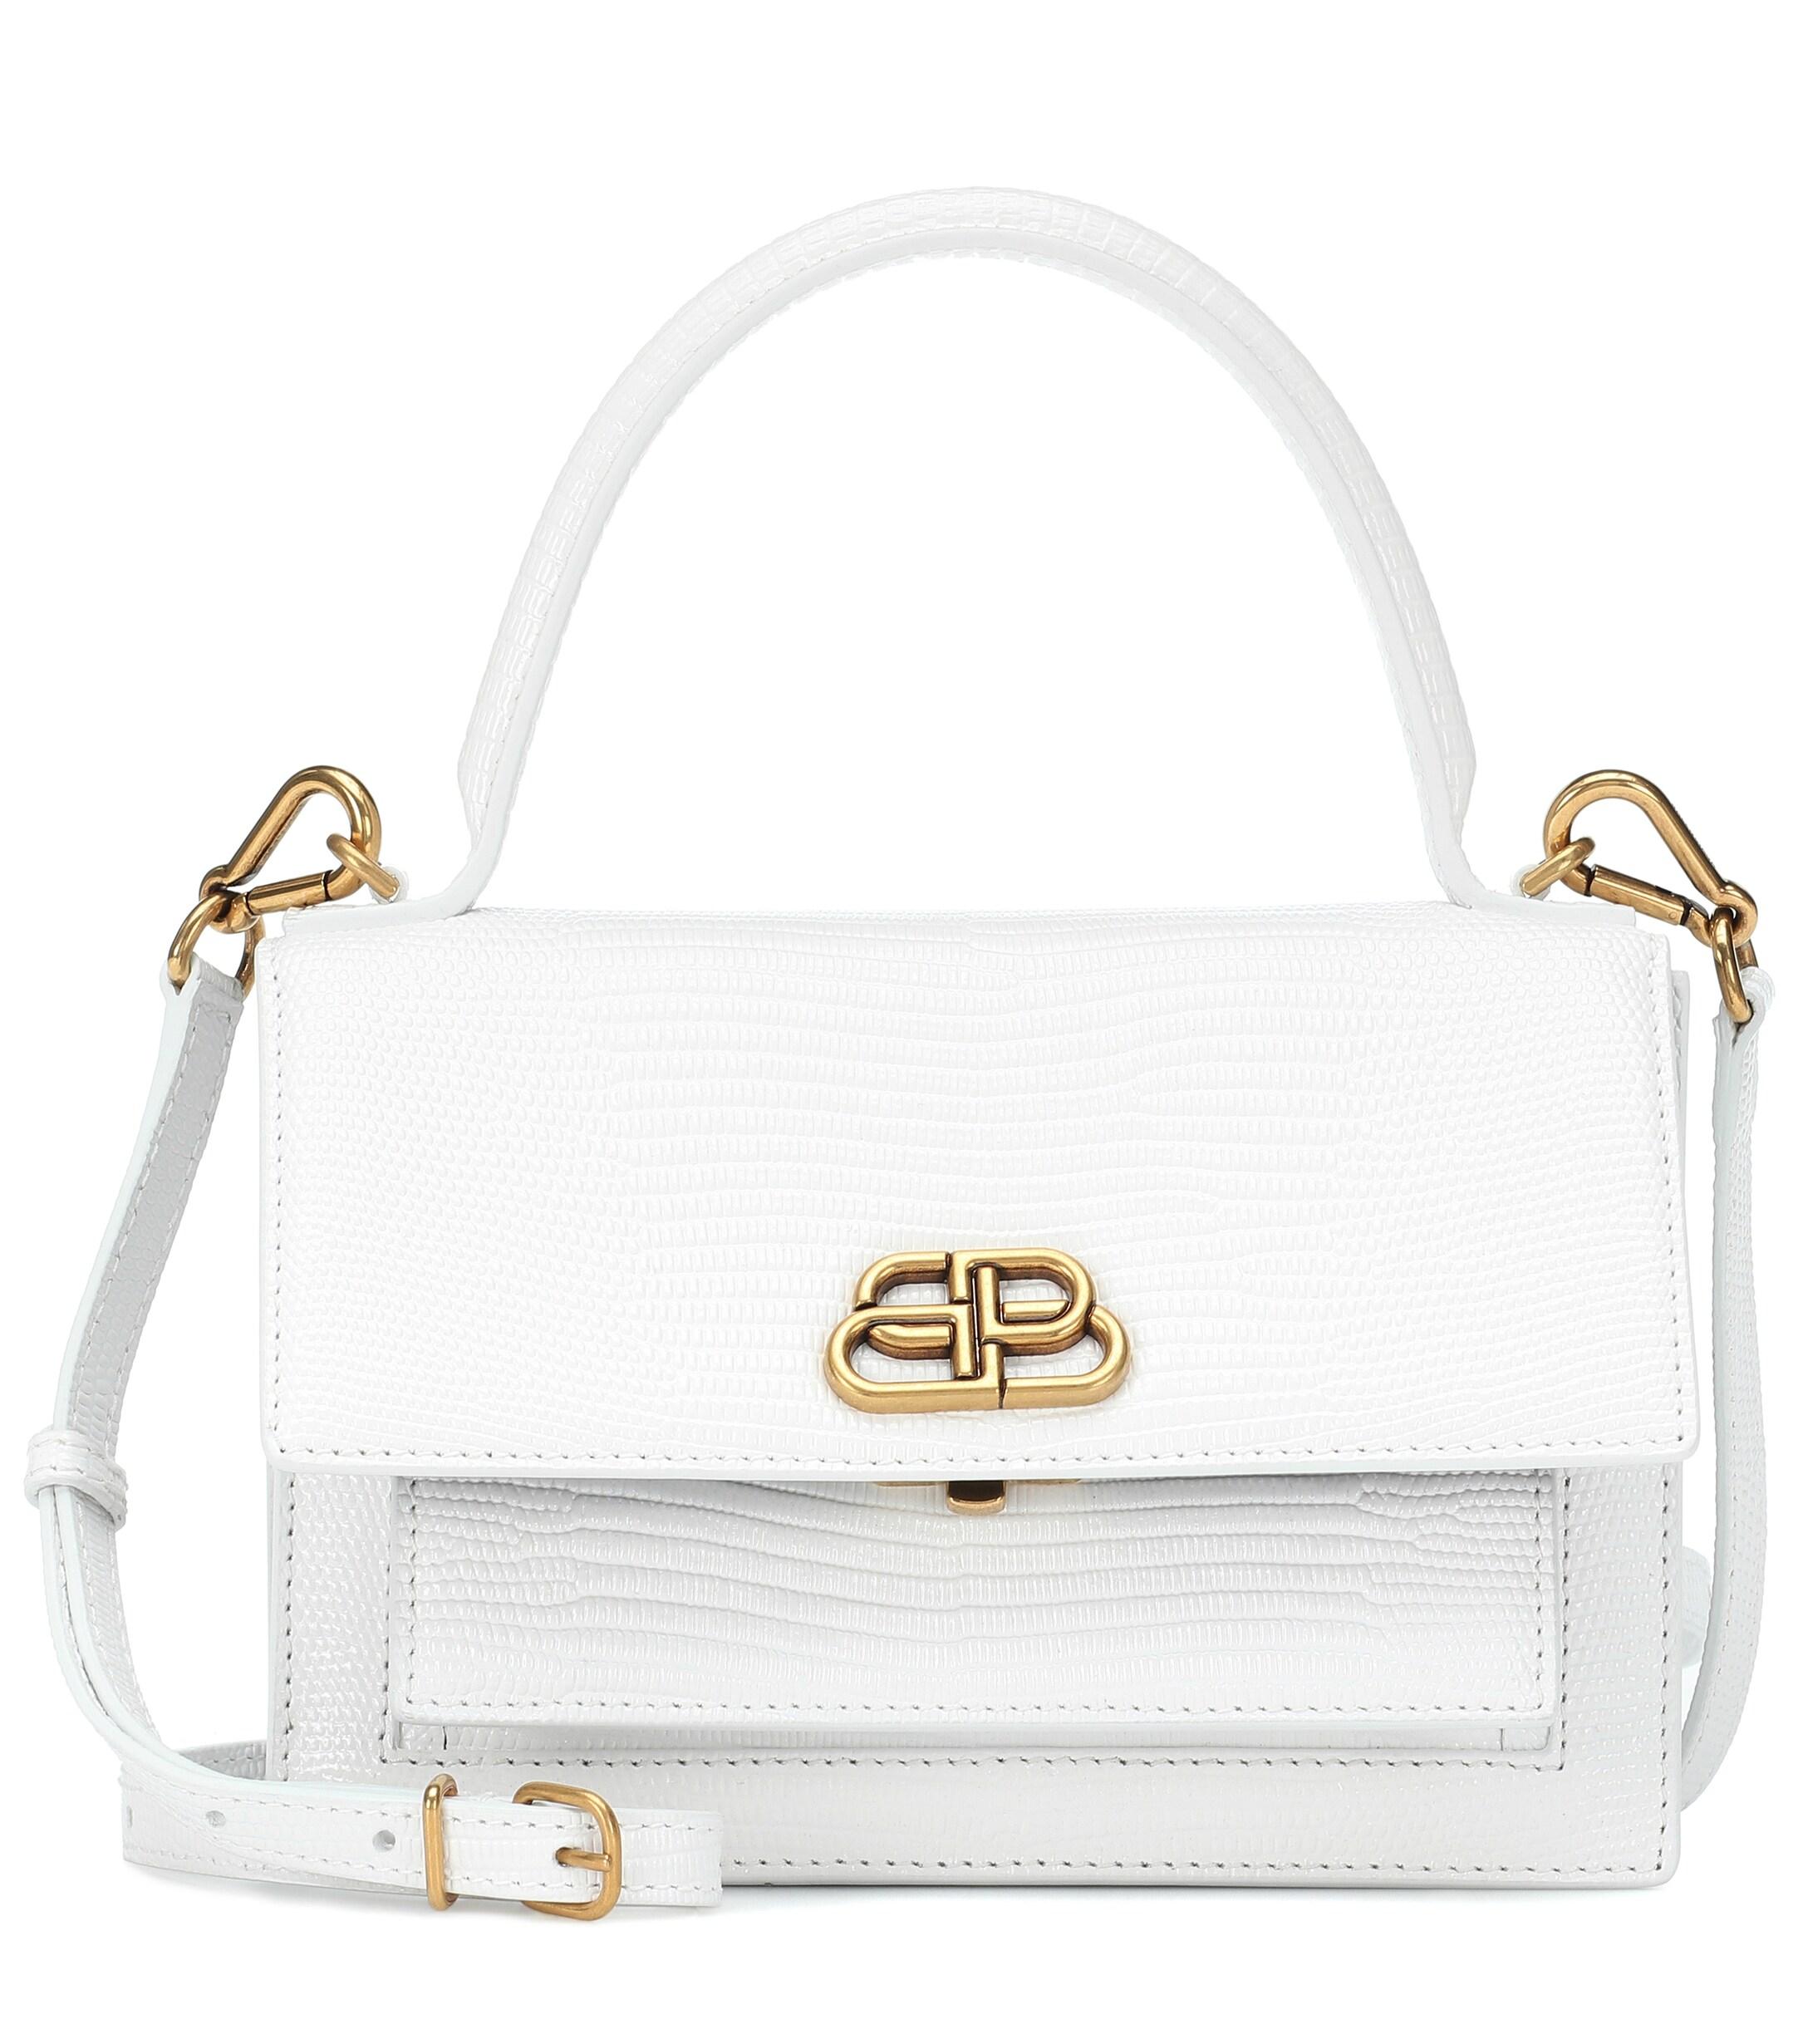 Balenciaga Sharp Xs Leather Shoulder Bag in White - Lyst